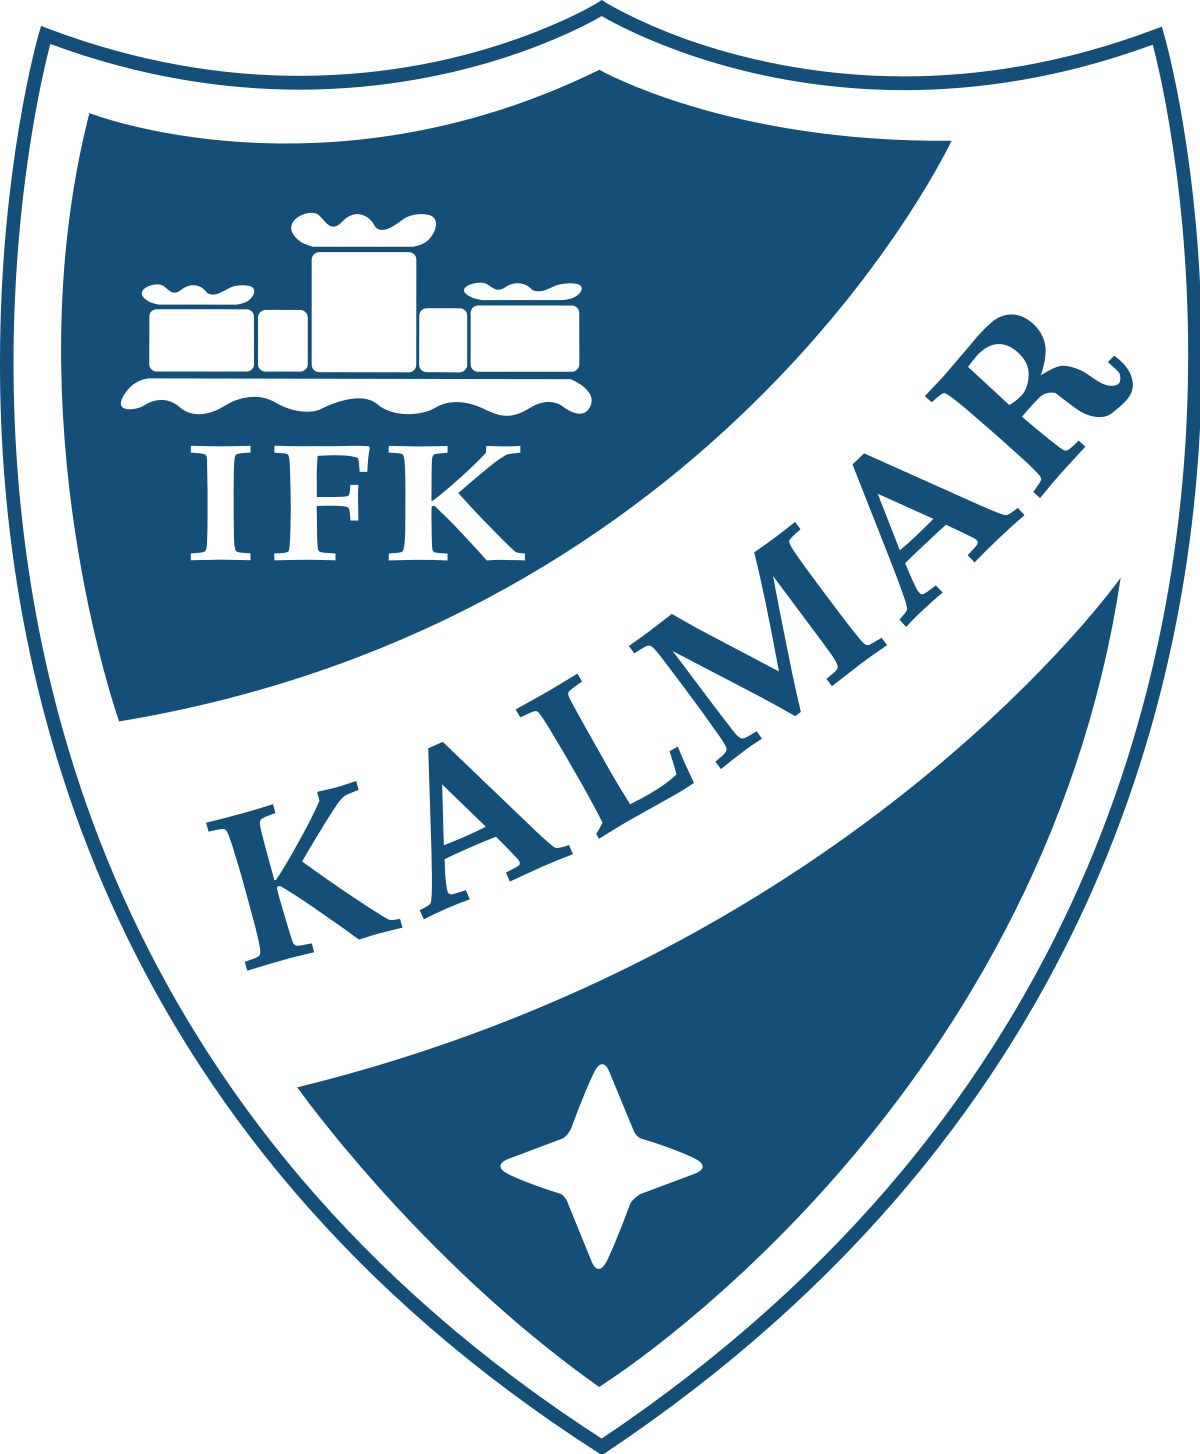 IFK KALMAR